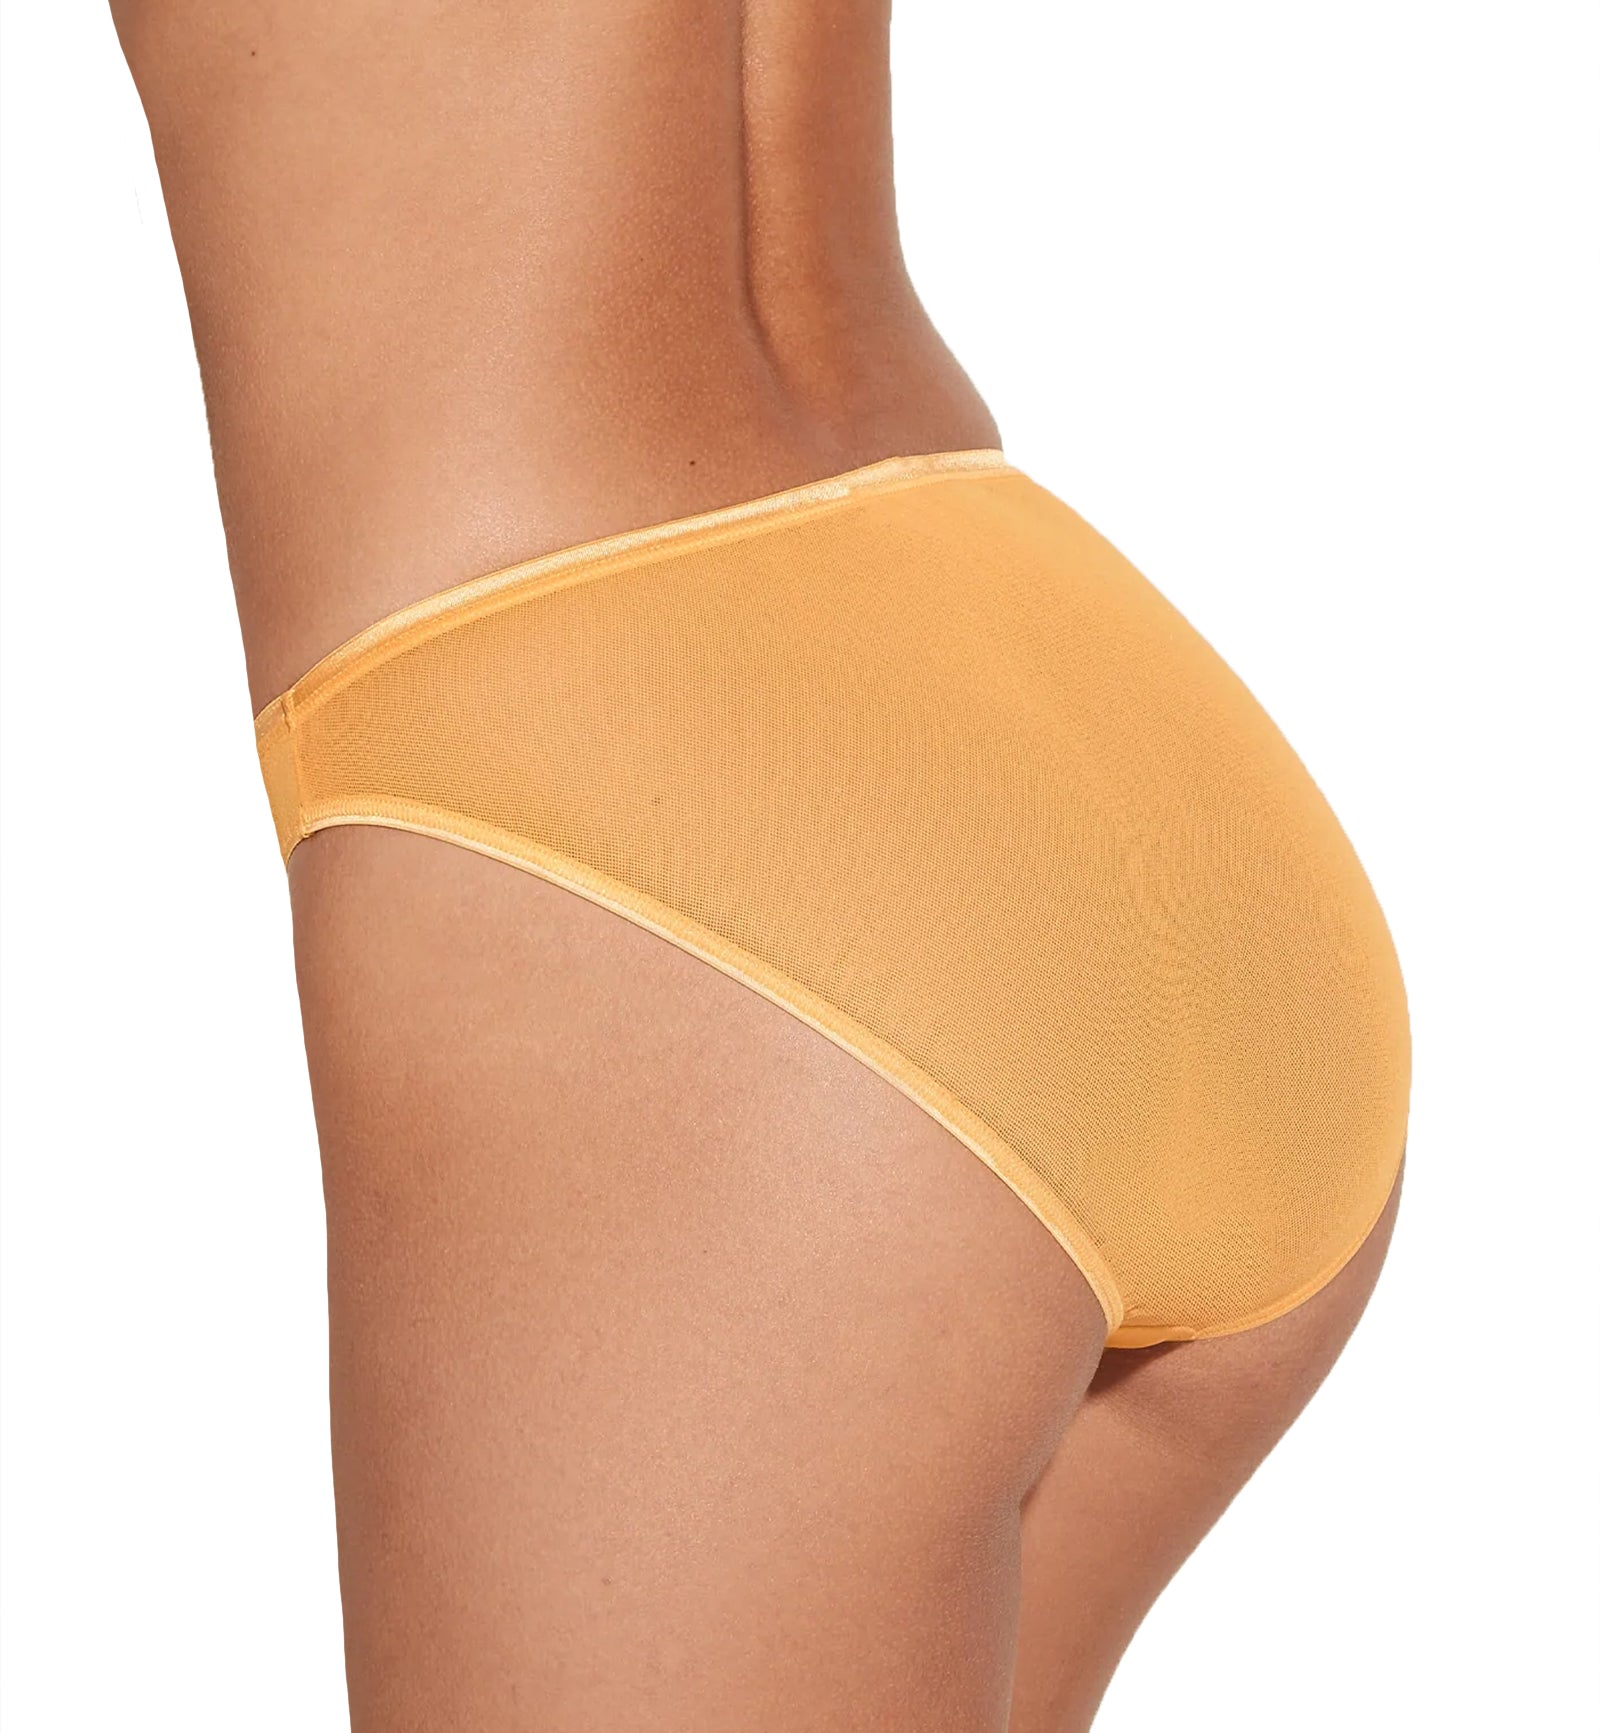 Cosabella Soire Confidence High Waist Bikini Panty (SOIRC0561),Small,Taaja Mango - Taaja Mango,Small